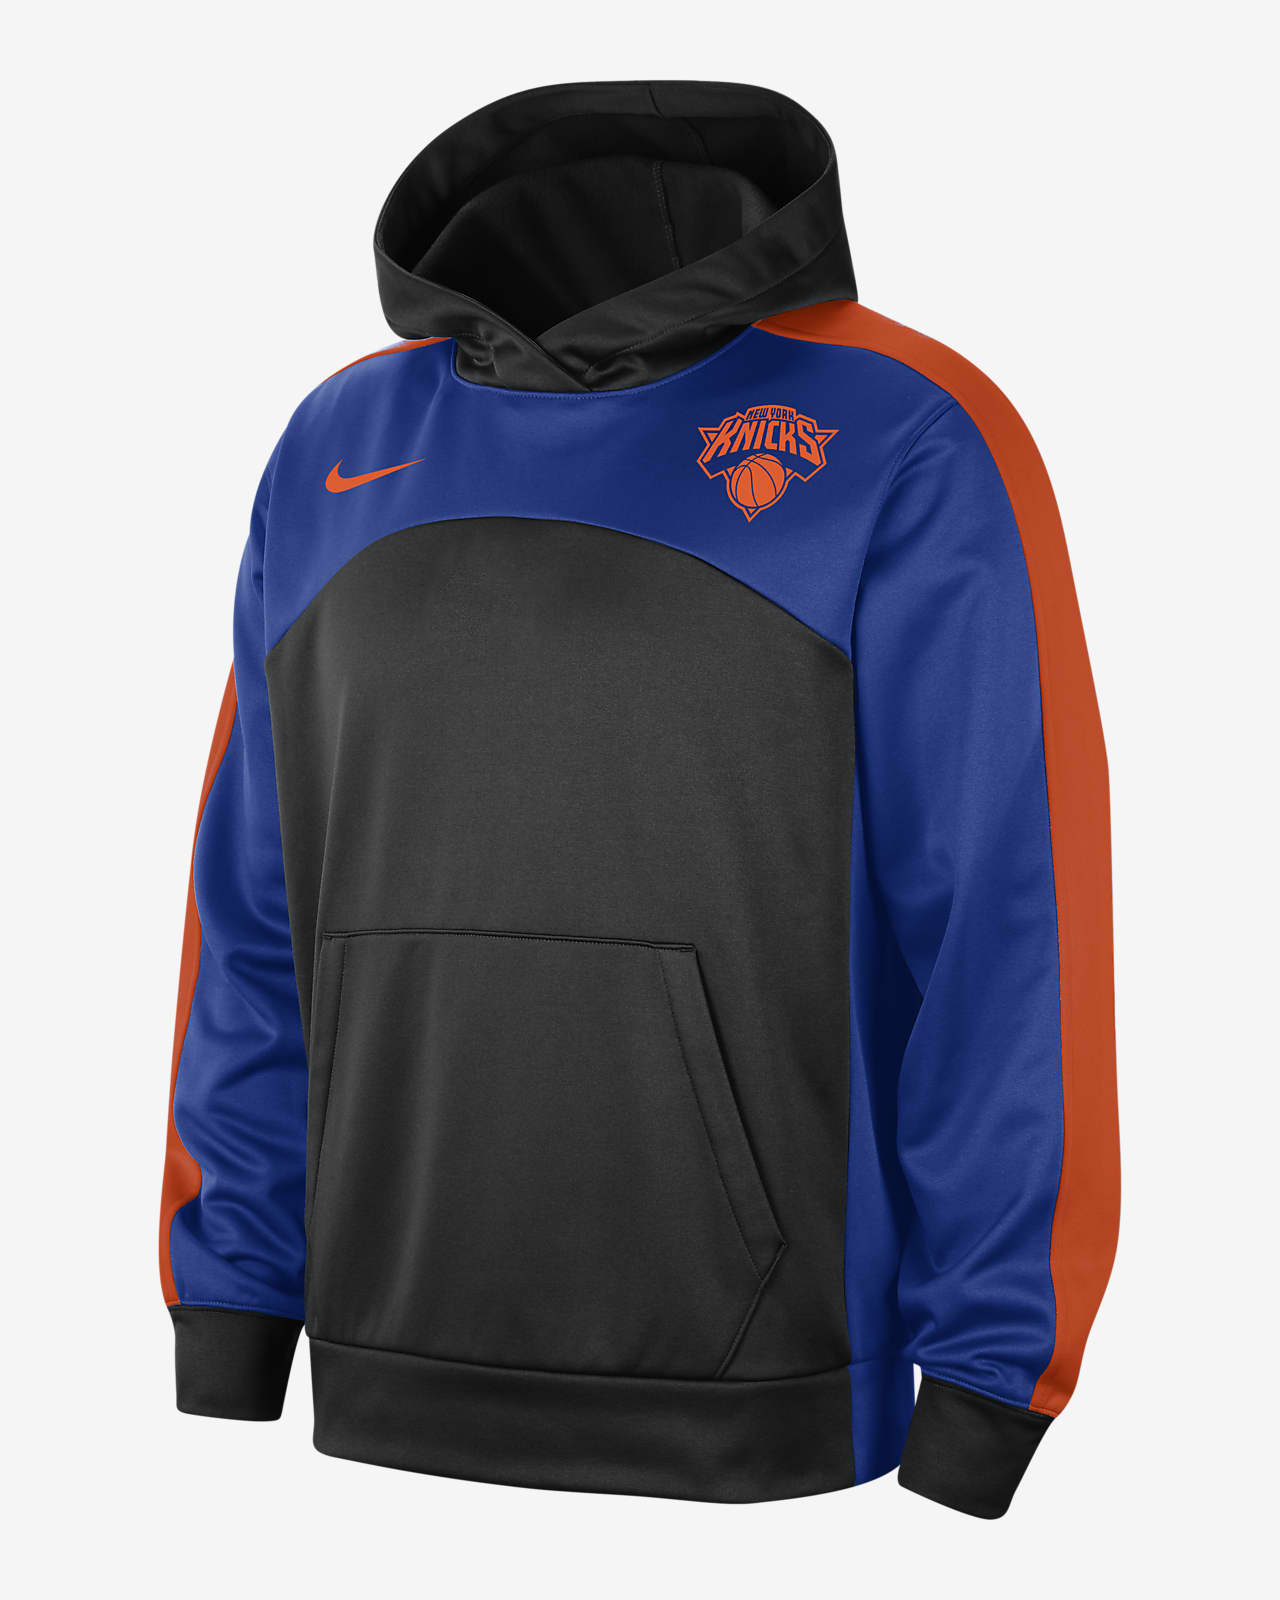 New York Knicks Starting 5 Men's Nike Therma-FIT NBA Graphic Hoodie.